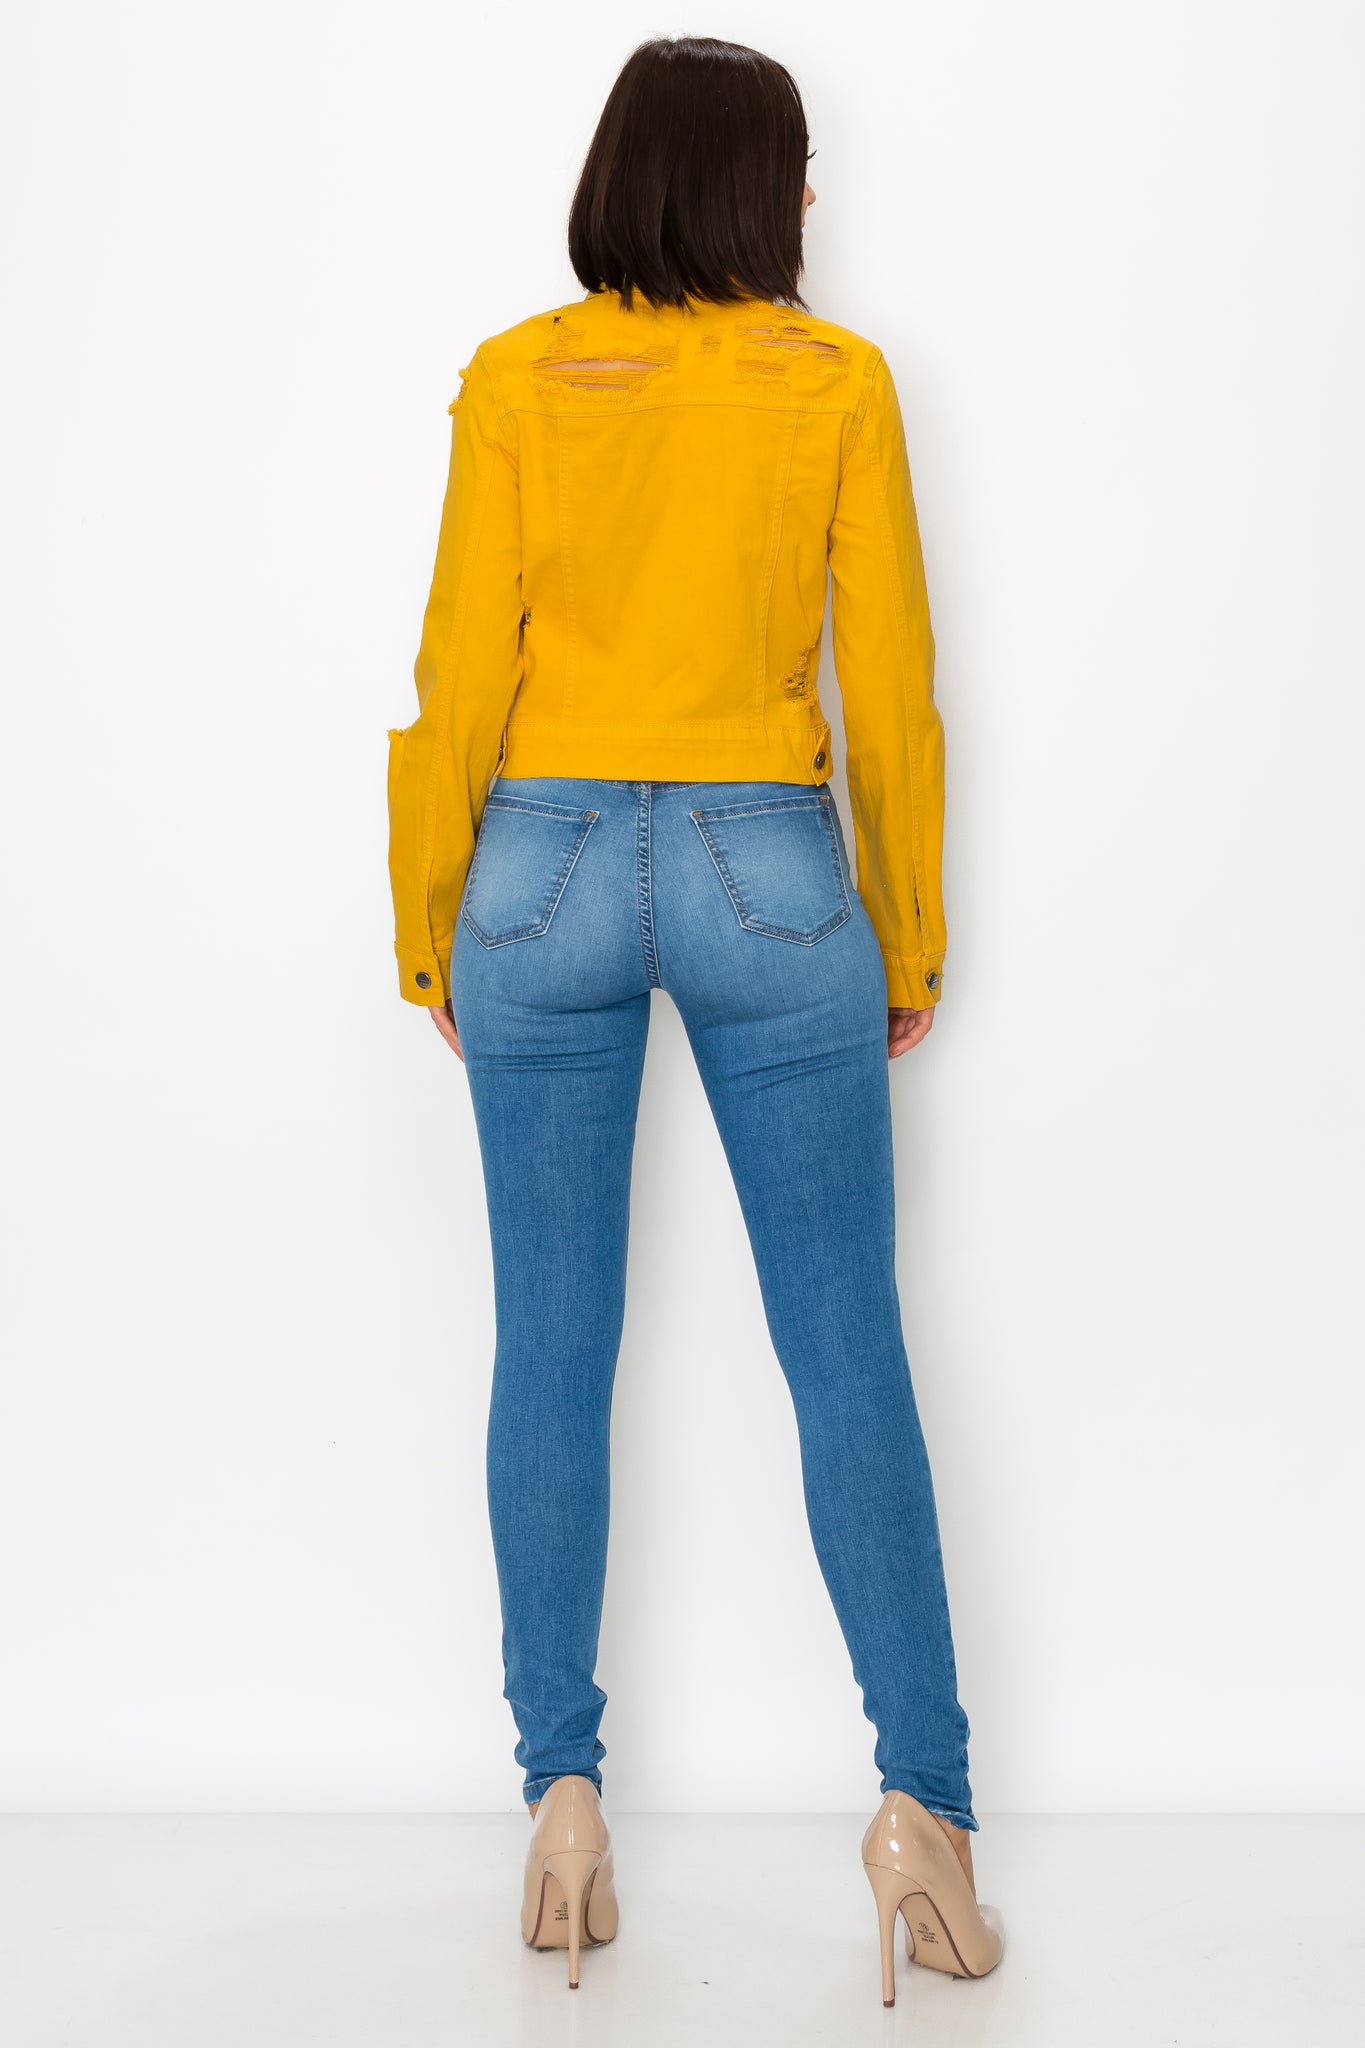 Buy Myracollection Full Sleeves Denim Yellow Jacket for Women (Yellow,  Medium) at Amazon.in